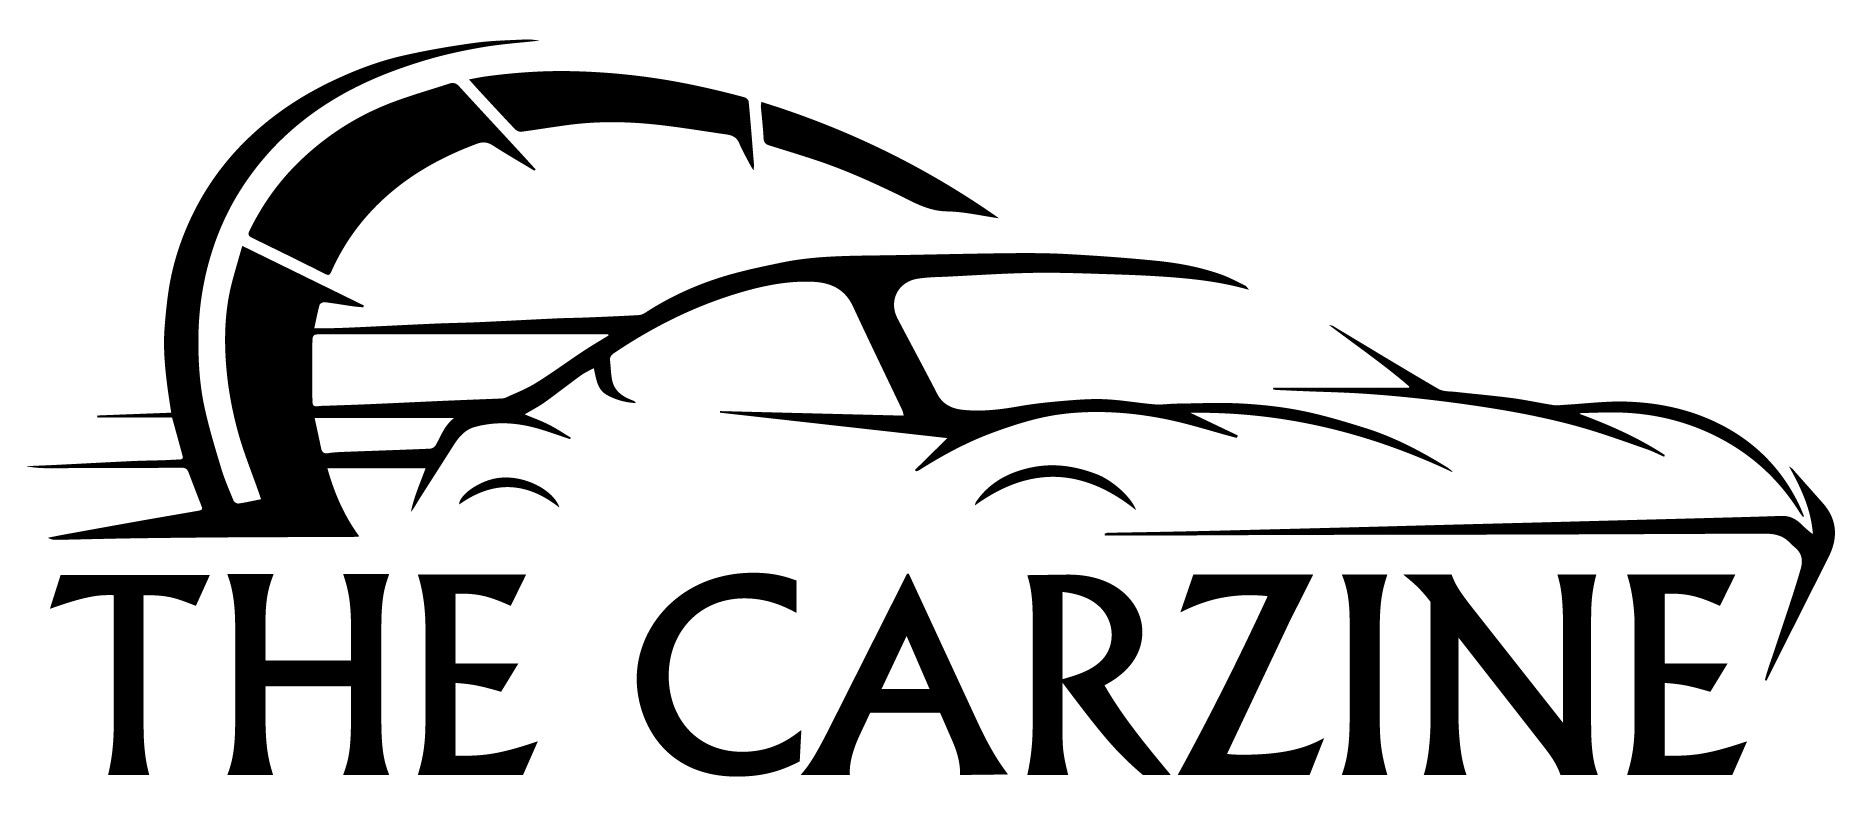 The Carzine